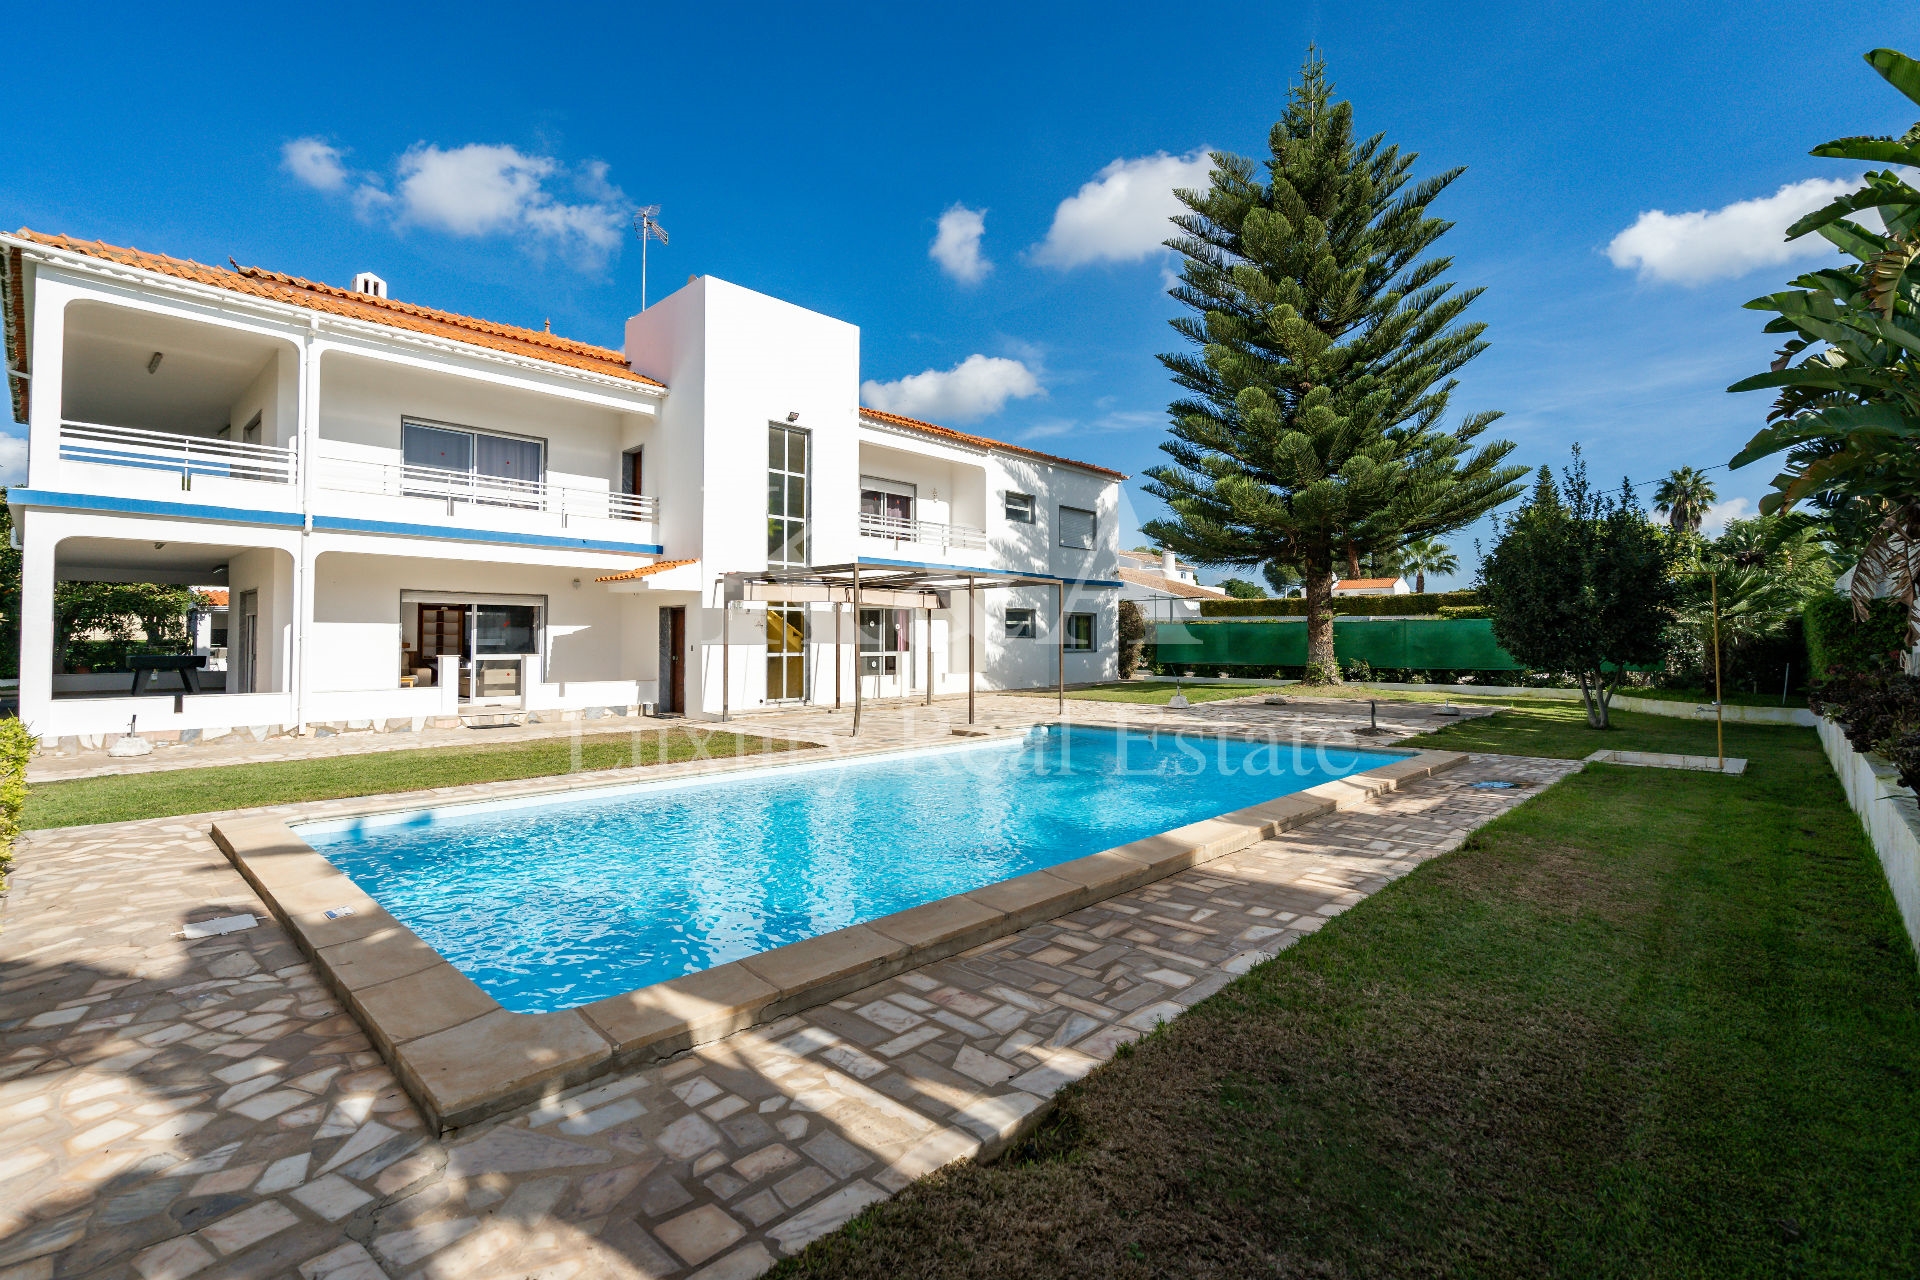 6 Bedroom Villa in the Golden Triangle, Algarve